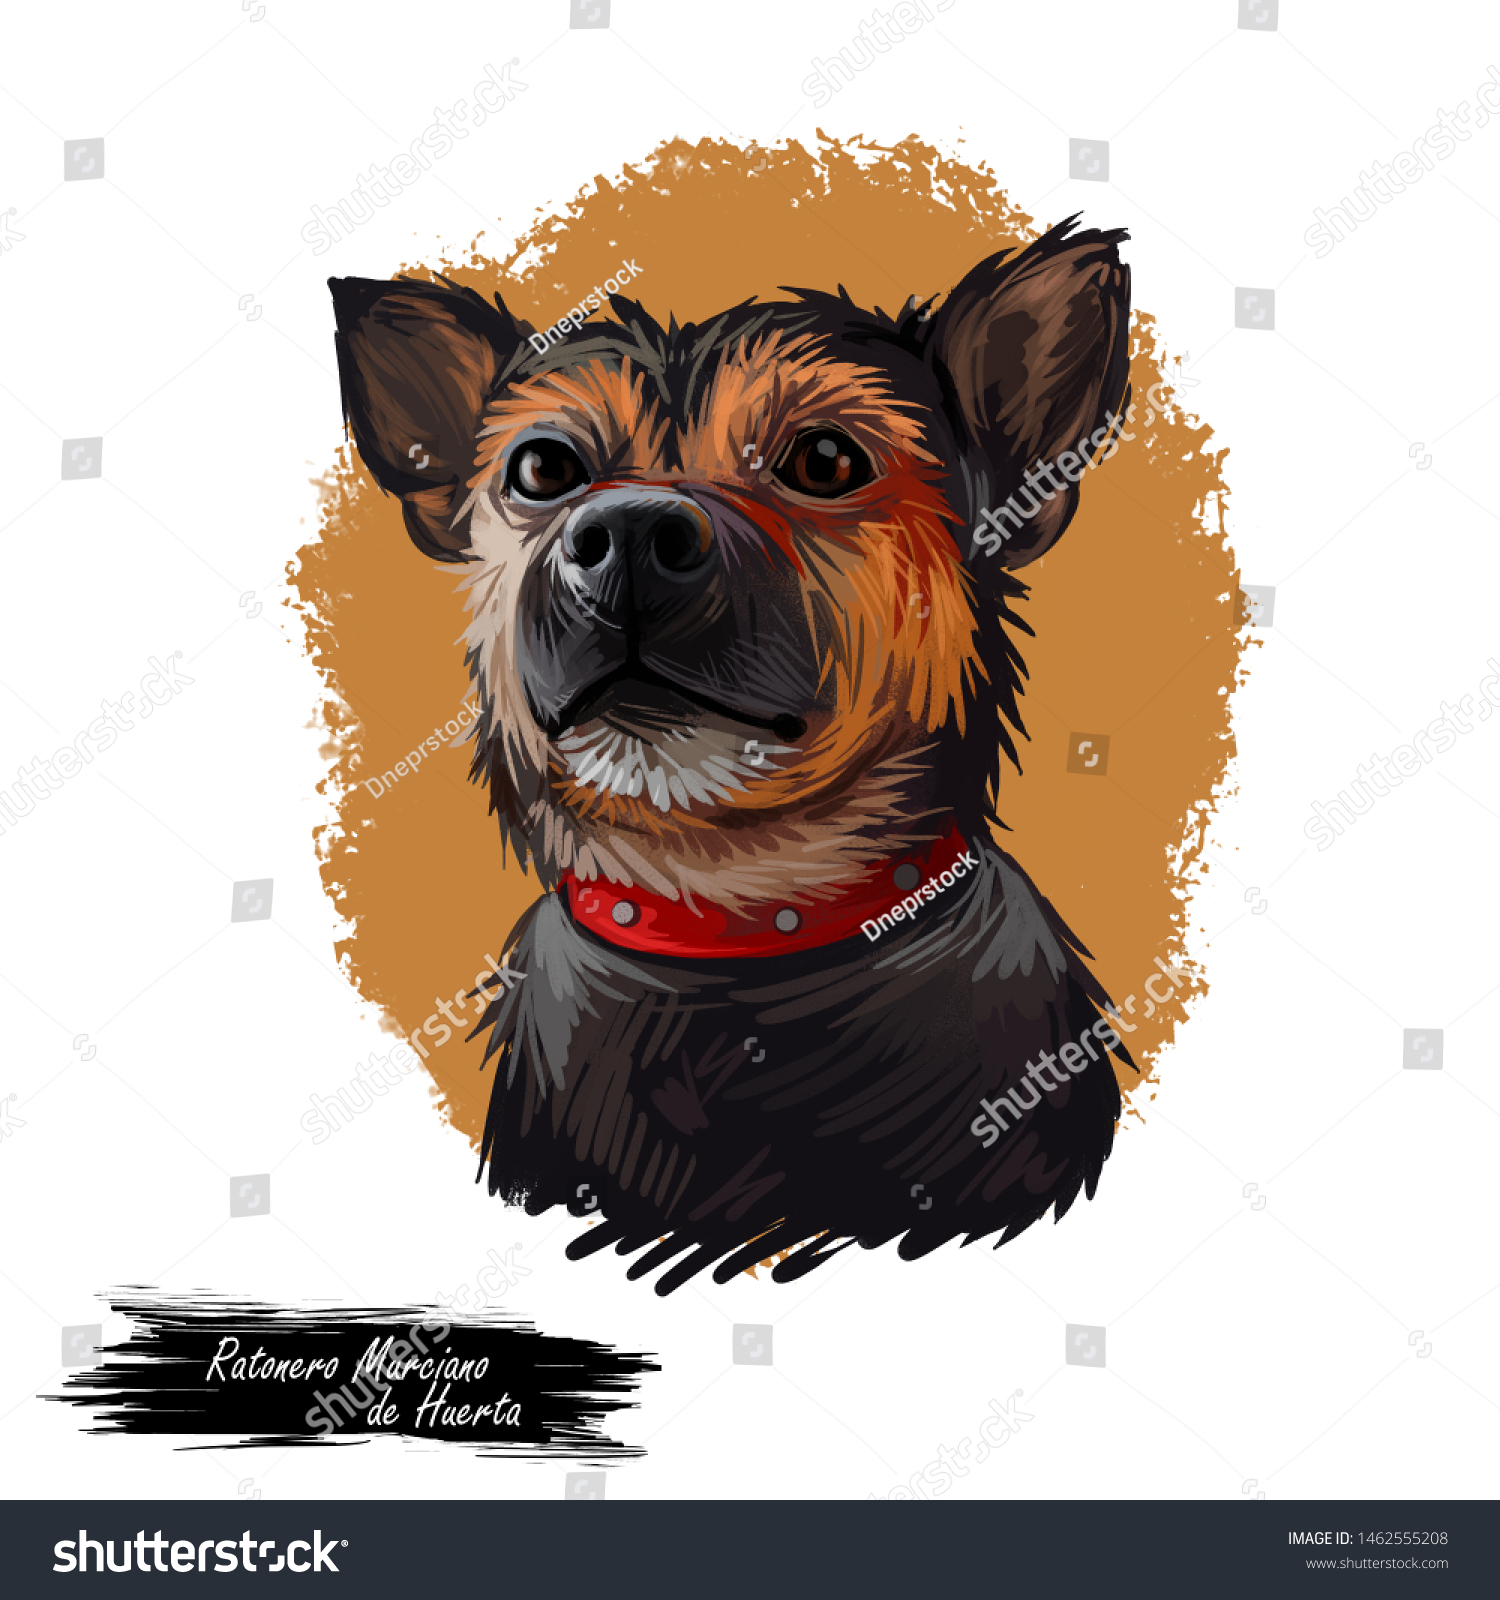 Ratonero Murciano De Huerta Dog Portrait Stock Illustration 1462555208